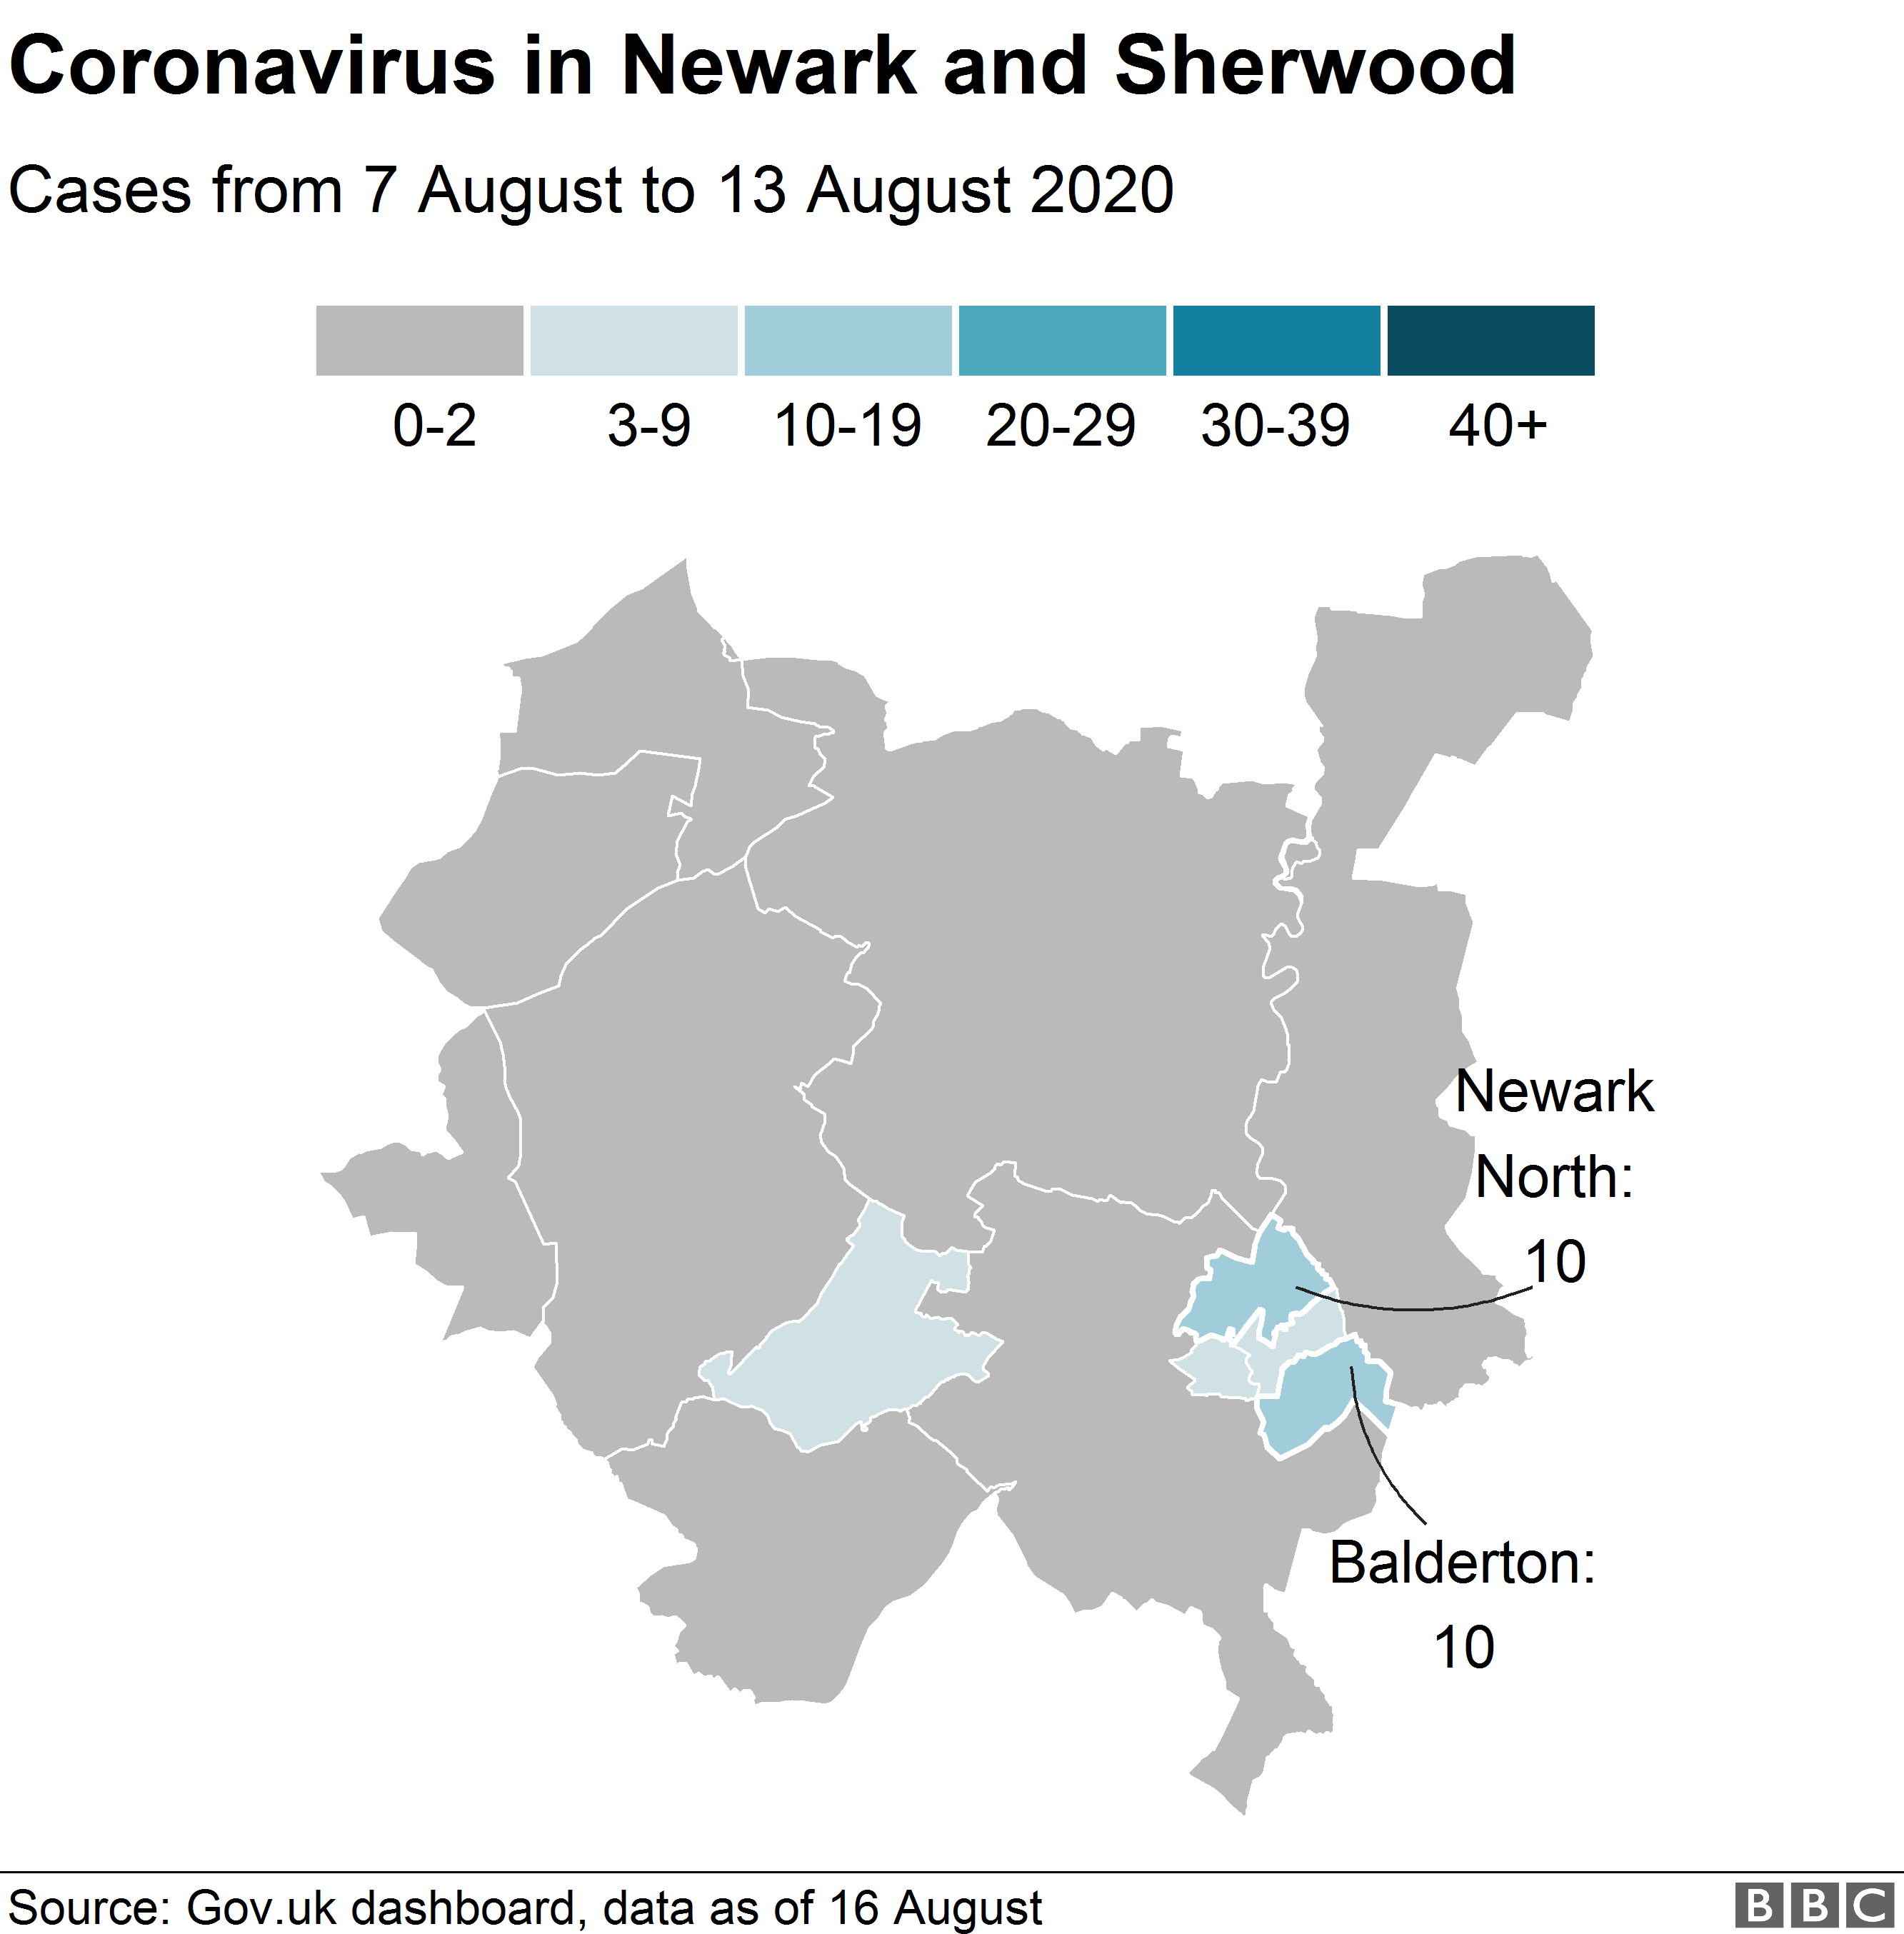 Map showing coronavirus cases in Newark and Sherwood